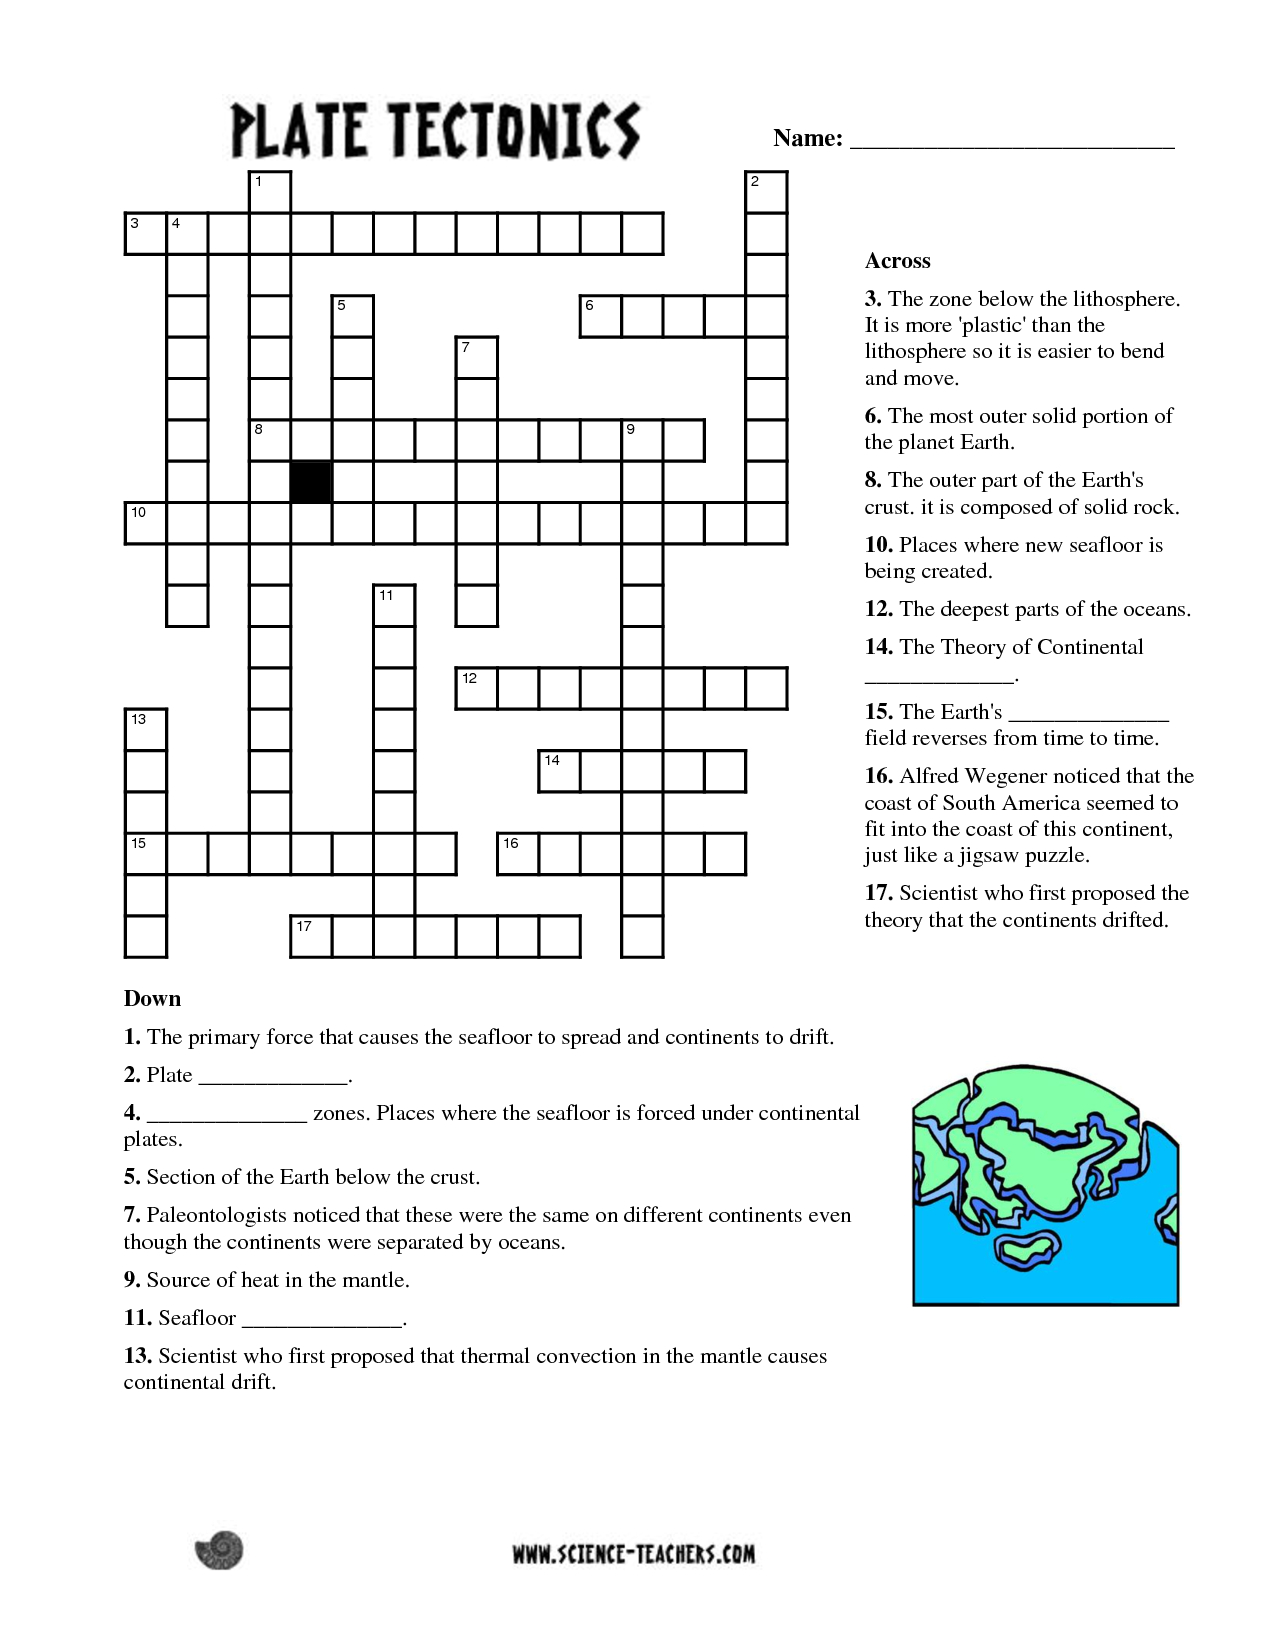 printable-science-puzzles-printable-crossword-puzzles